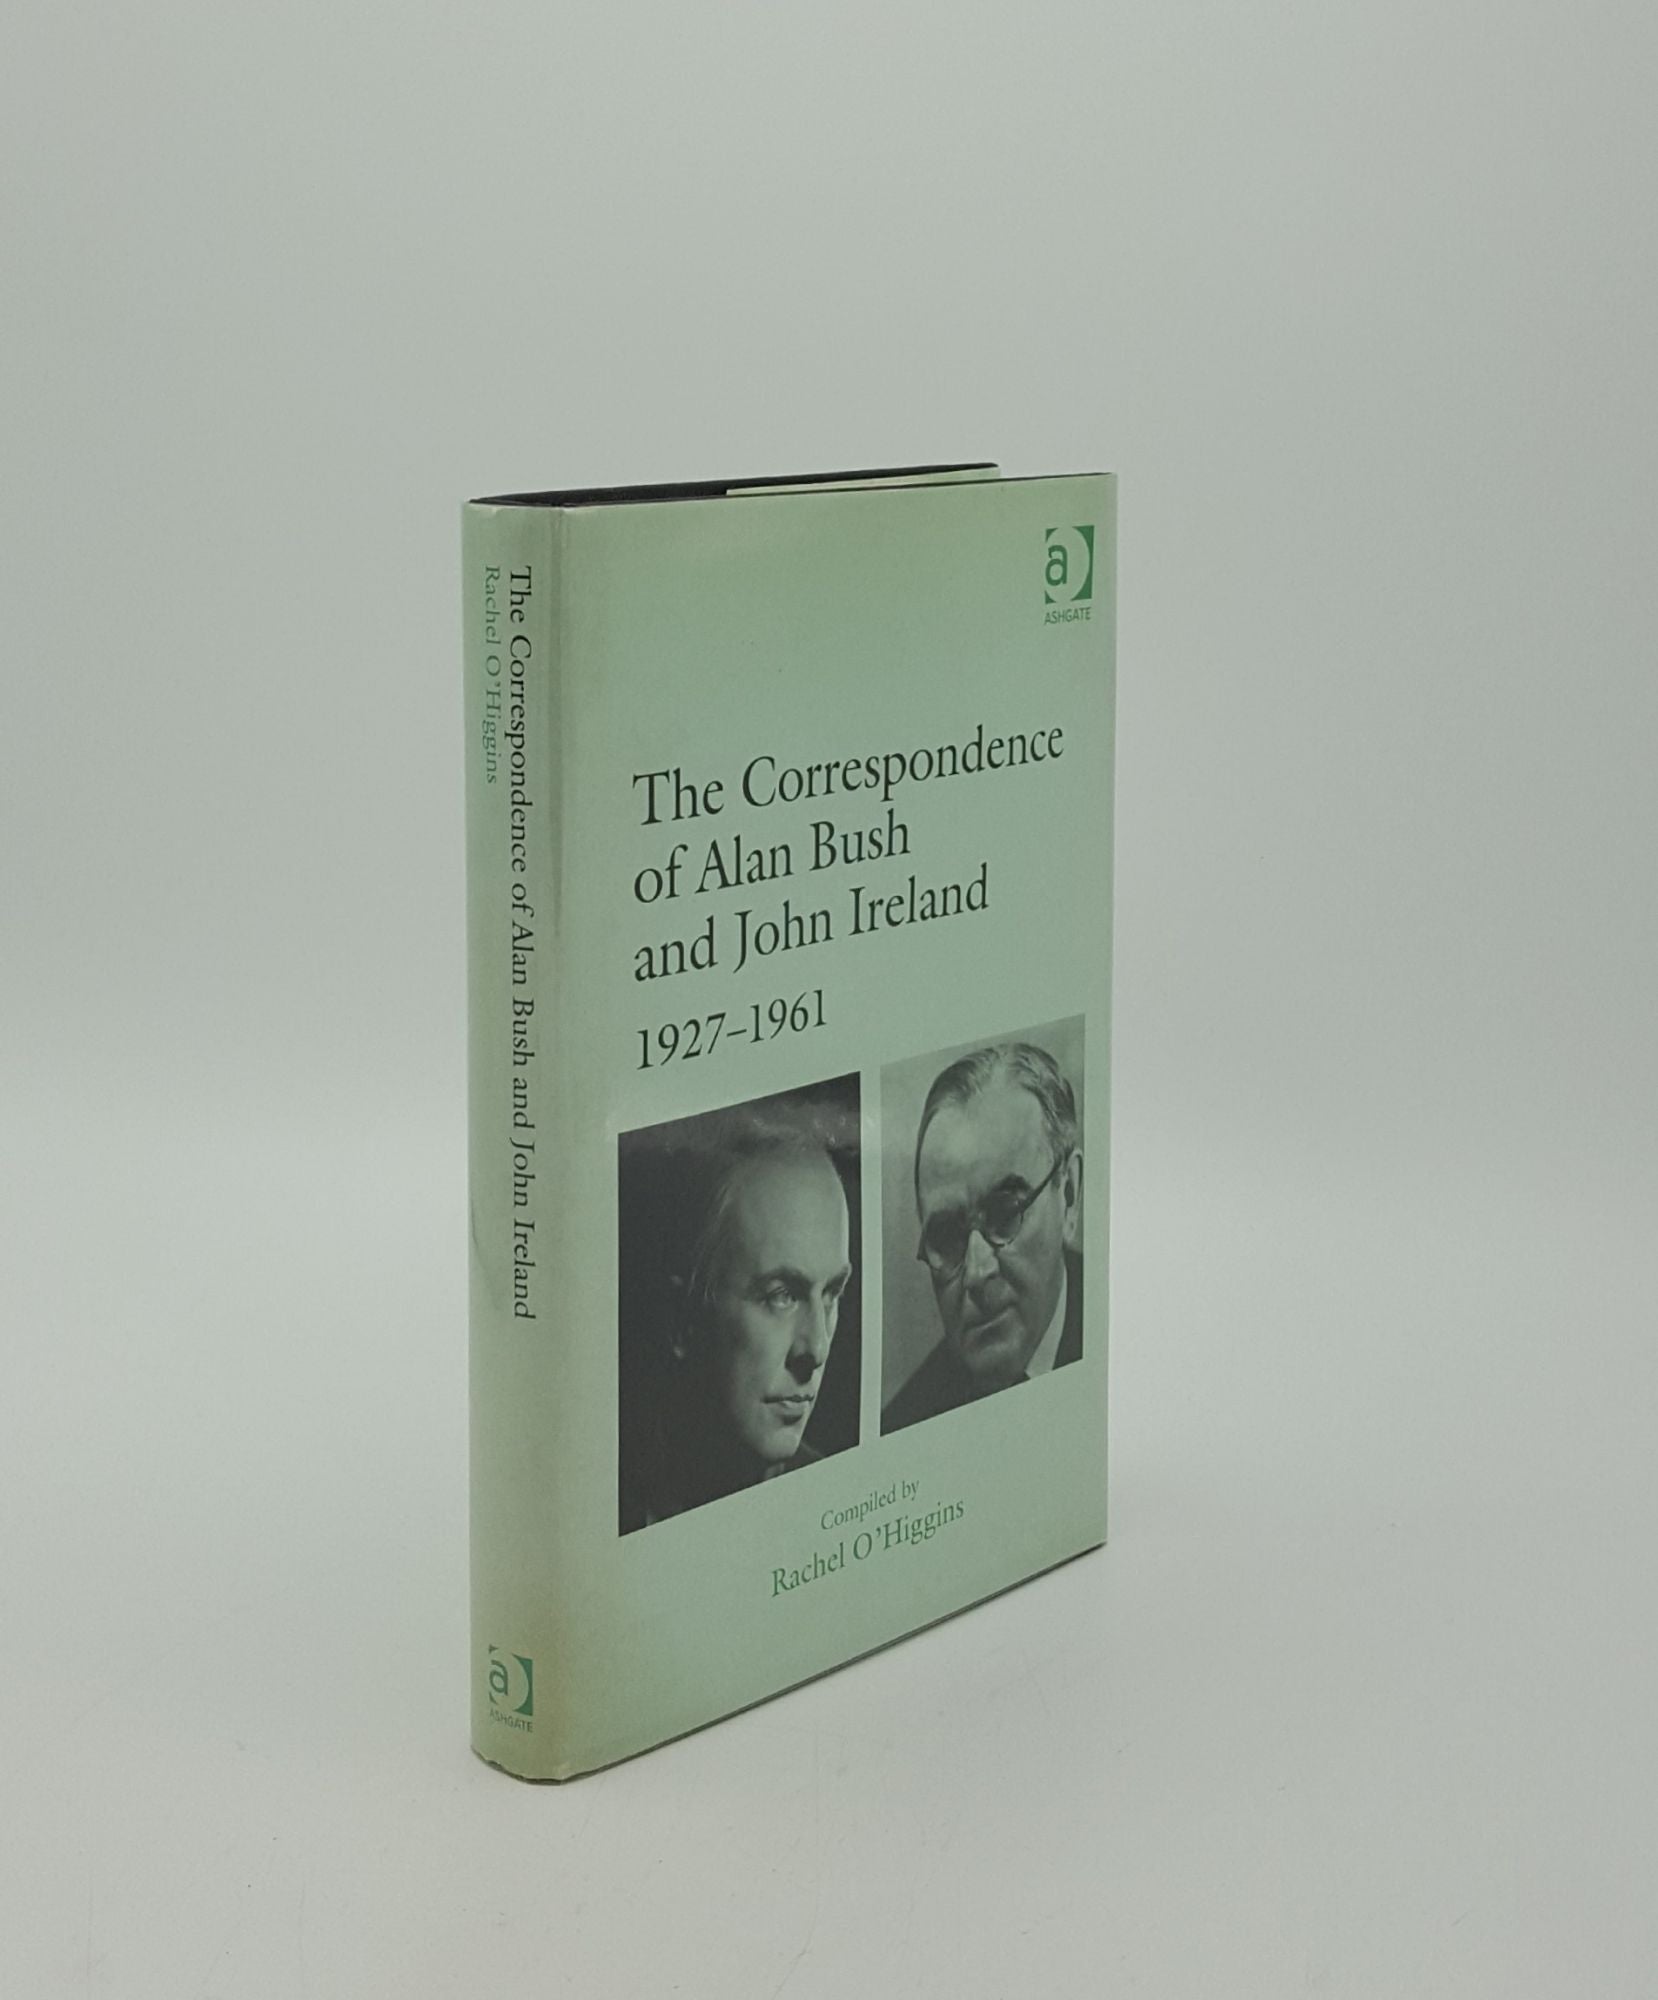 BUSH Alan, IRELAND John, O'HIGGINS Rachel - The Correspondence of Alan Bush and John Ireland 1927-1961